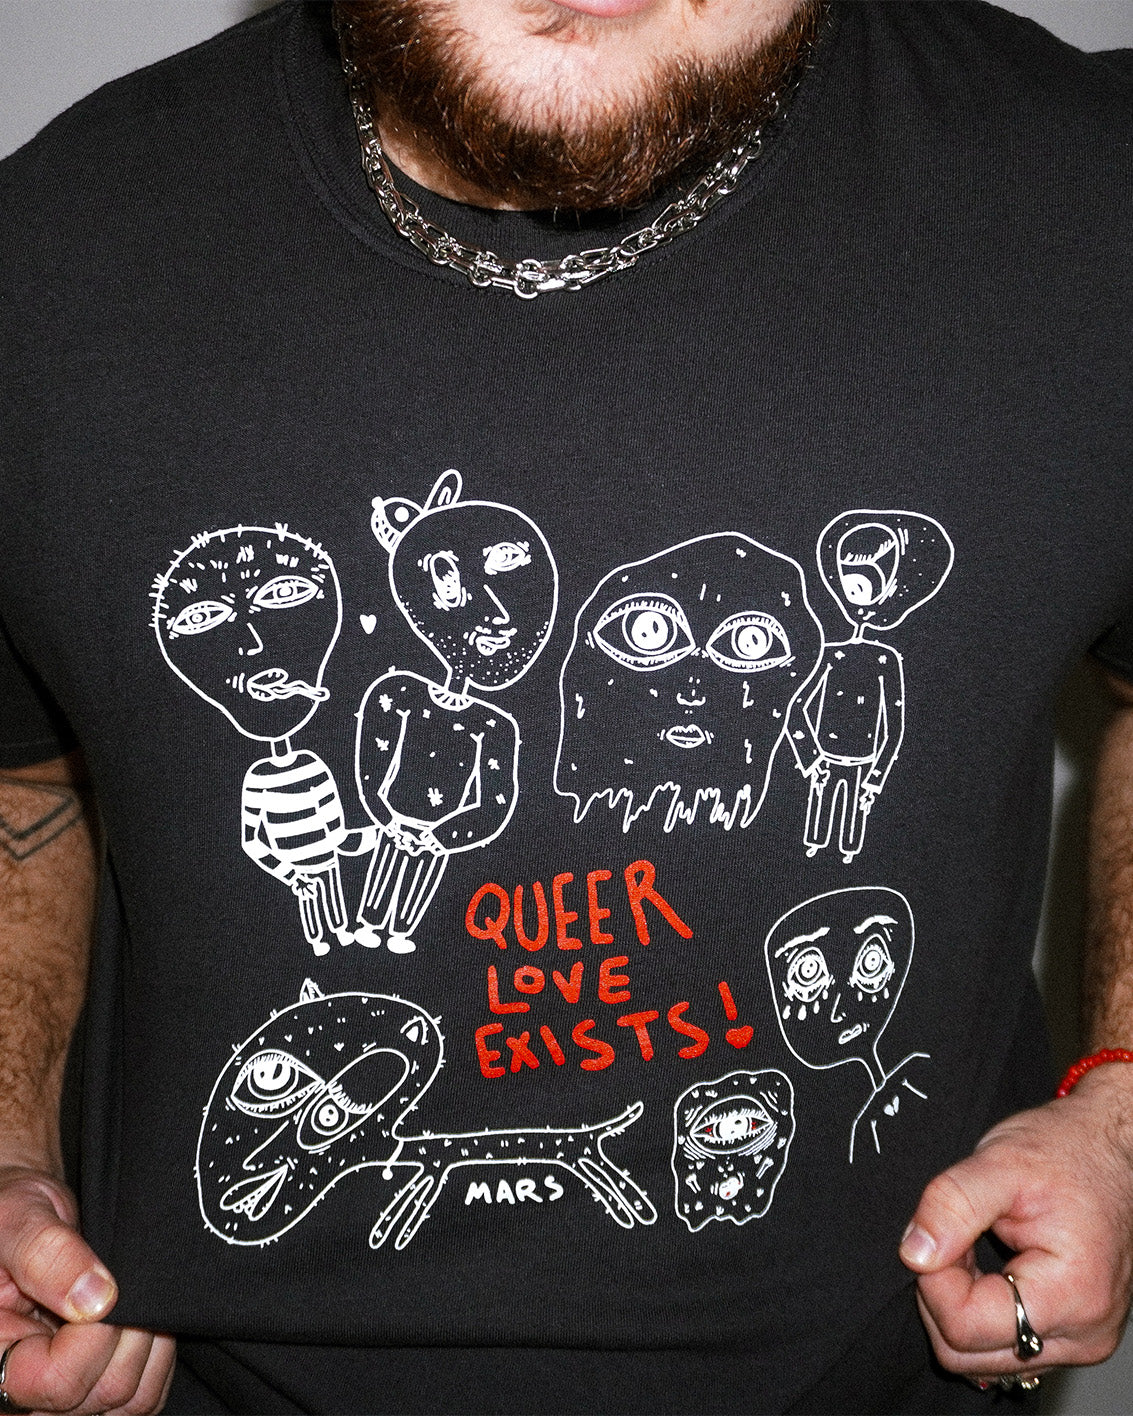 queer love exists shirt